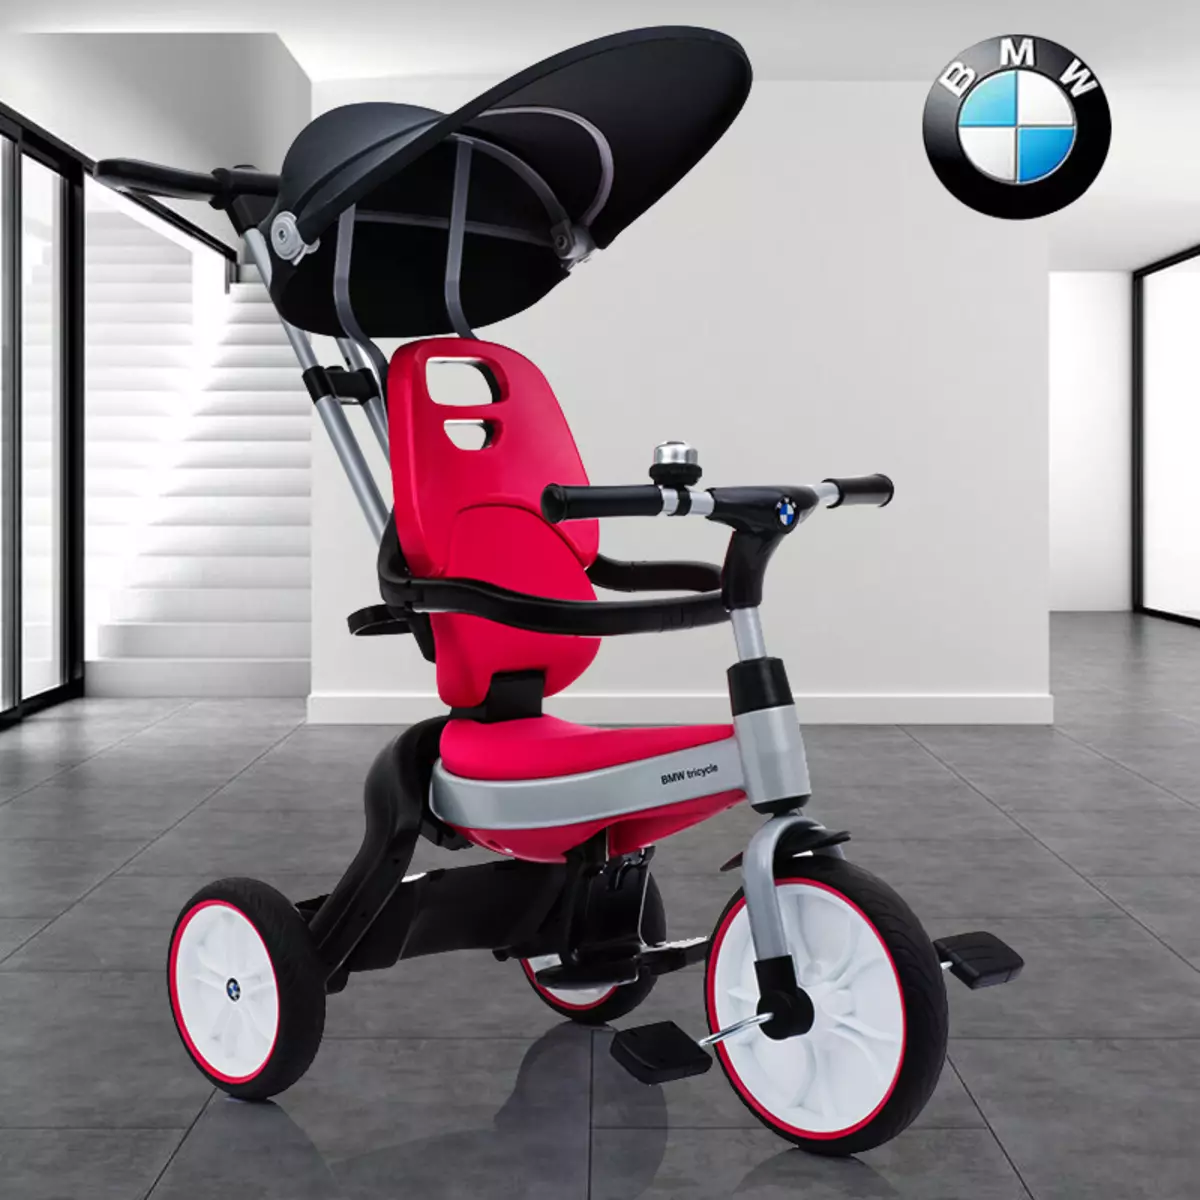 BMW የልጆች የቢስክሌት: ልጆች 4 እና 5, 6 እና 9, 10 ዓመት ብስክሌት ሞዴሎች KidSbike እና የስራ መደቡ የቢስክሌት, Mini እና የመዝናኛ መርከብ ይገምግሙ 20393_9